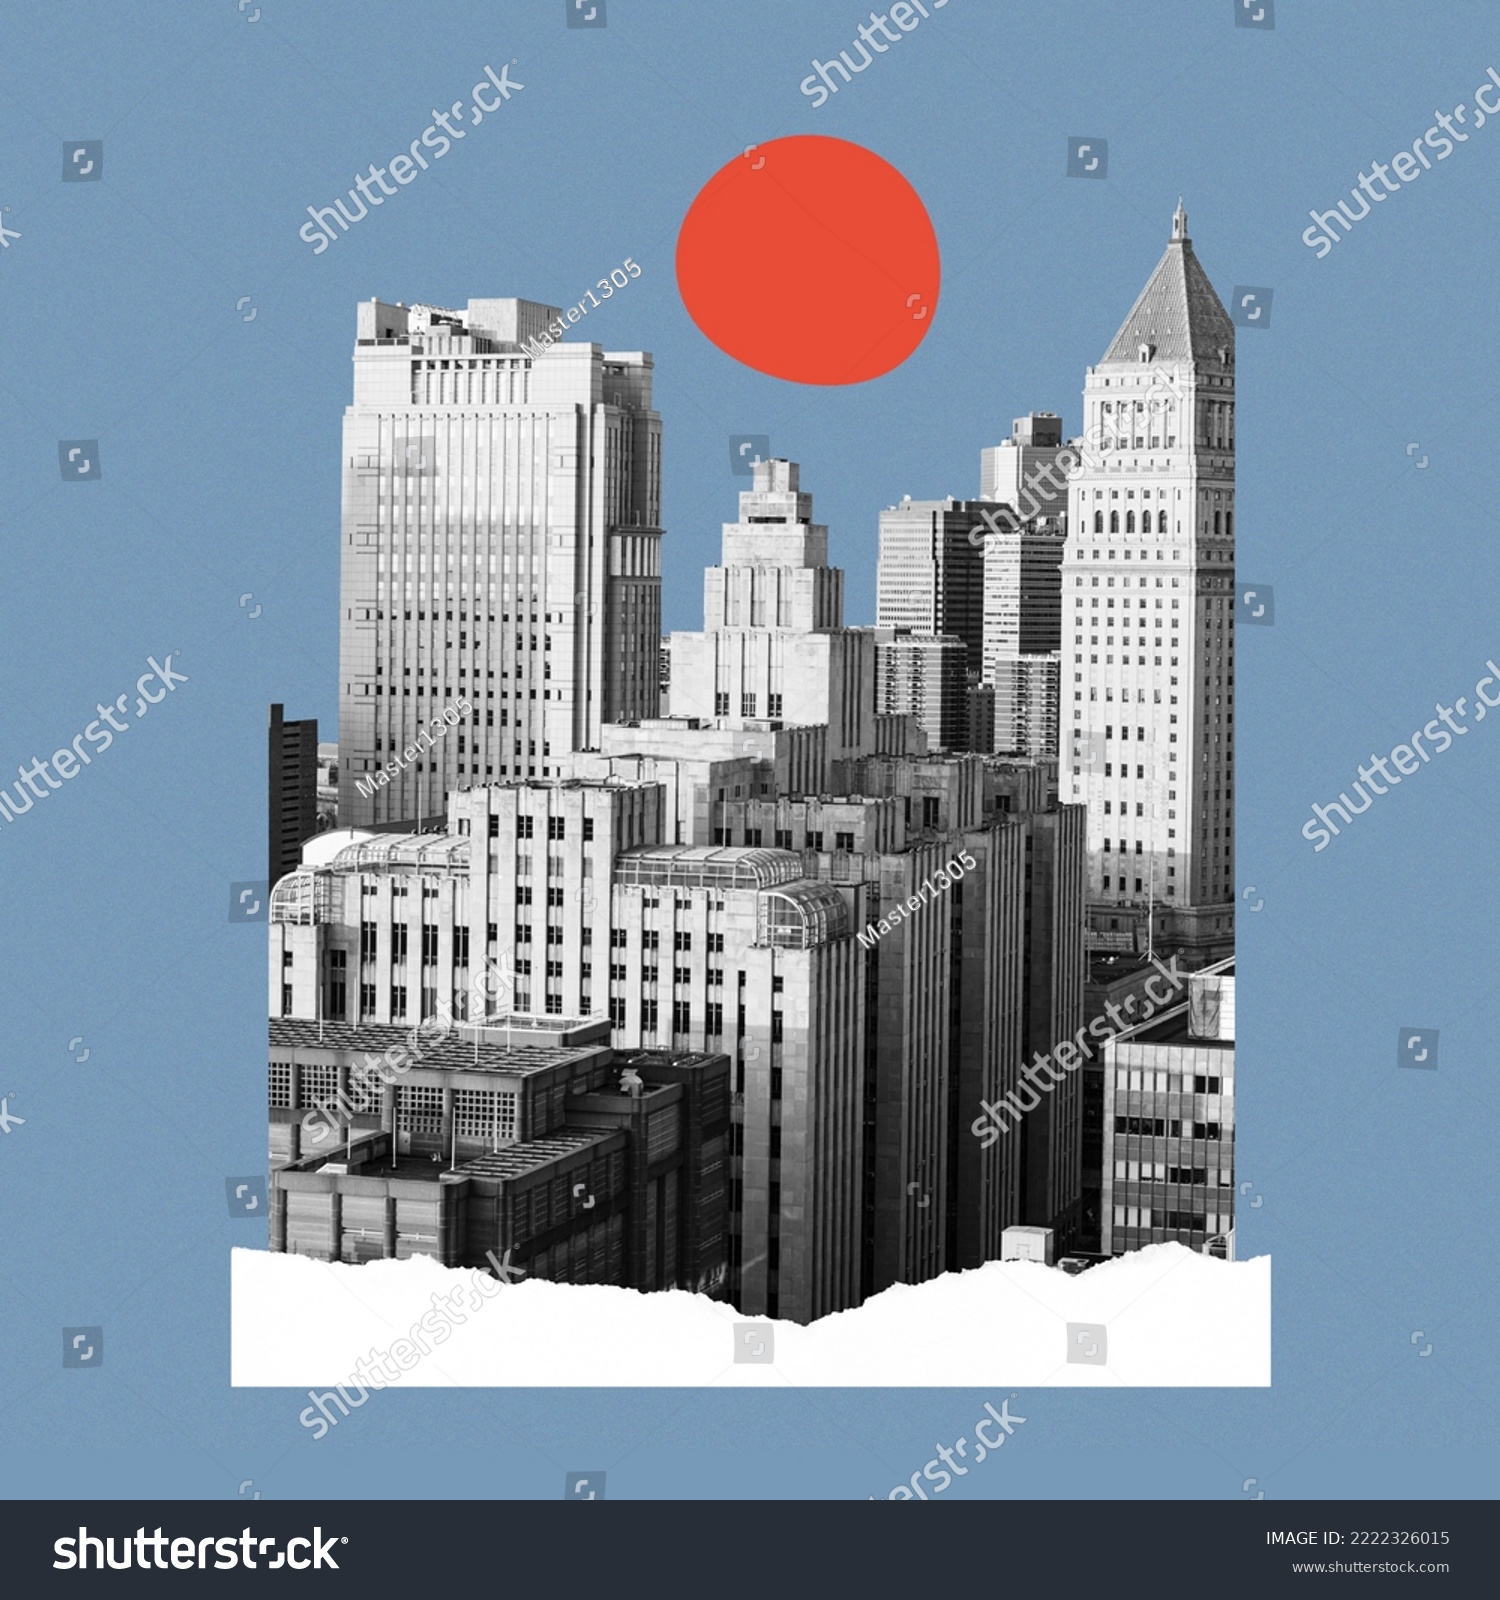 Contemporary artwork. Creative design in retro style. Black and white image of skyscrapers, business buildings in big city. Concept of creativity, surrealism, imagination, futuristic landscape. Poster #2222326015